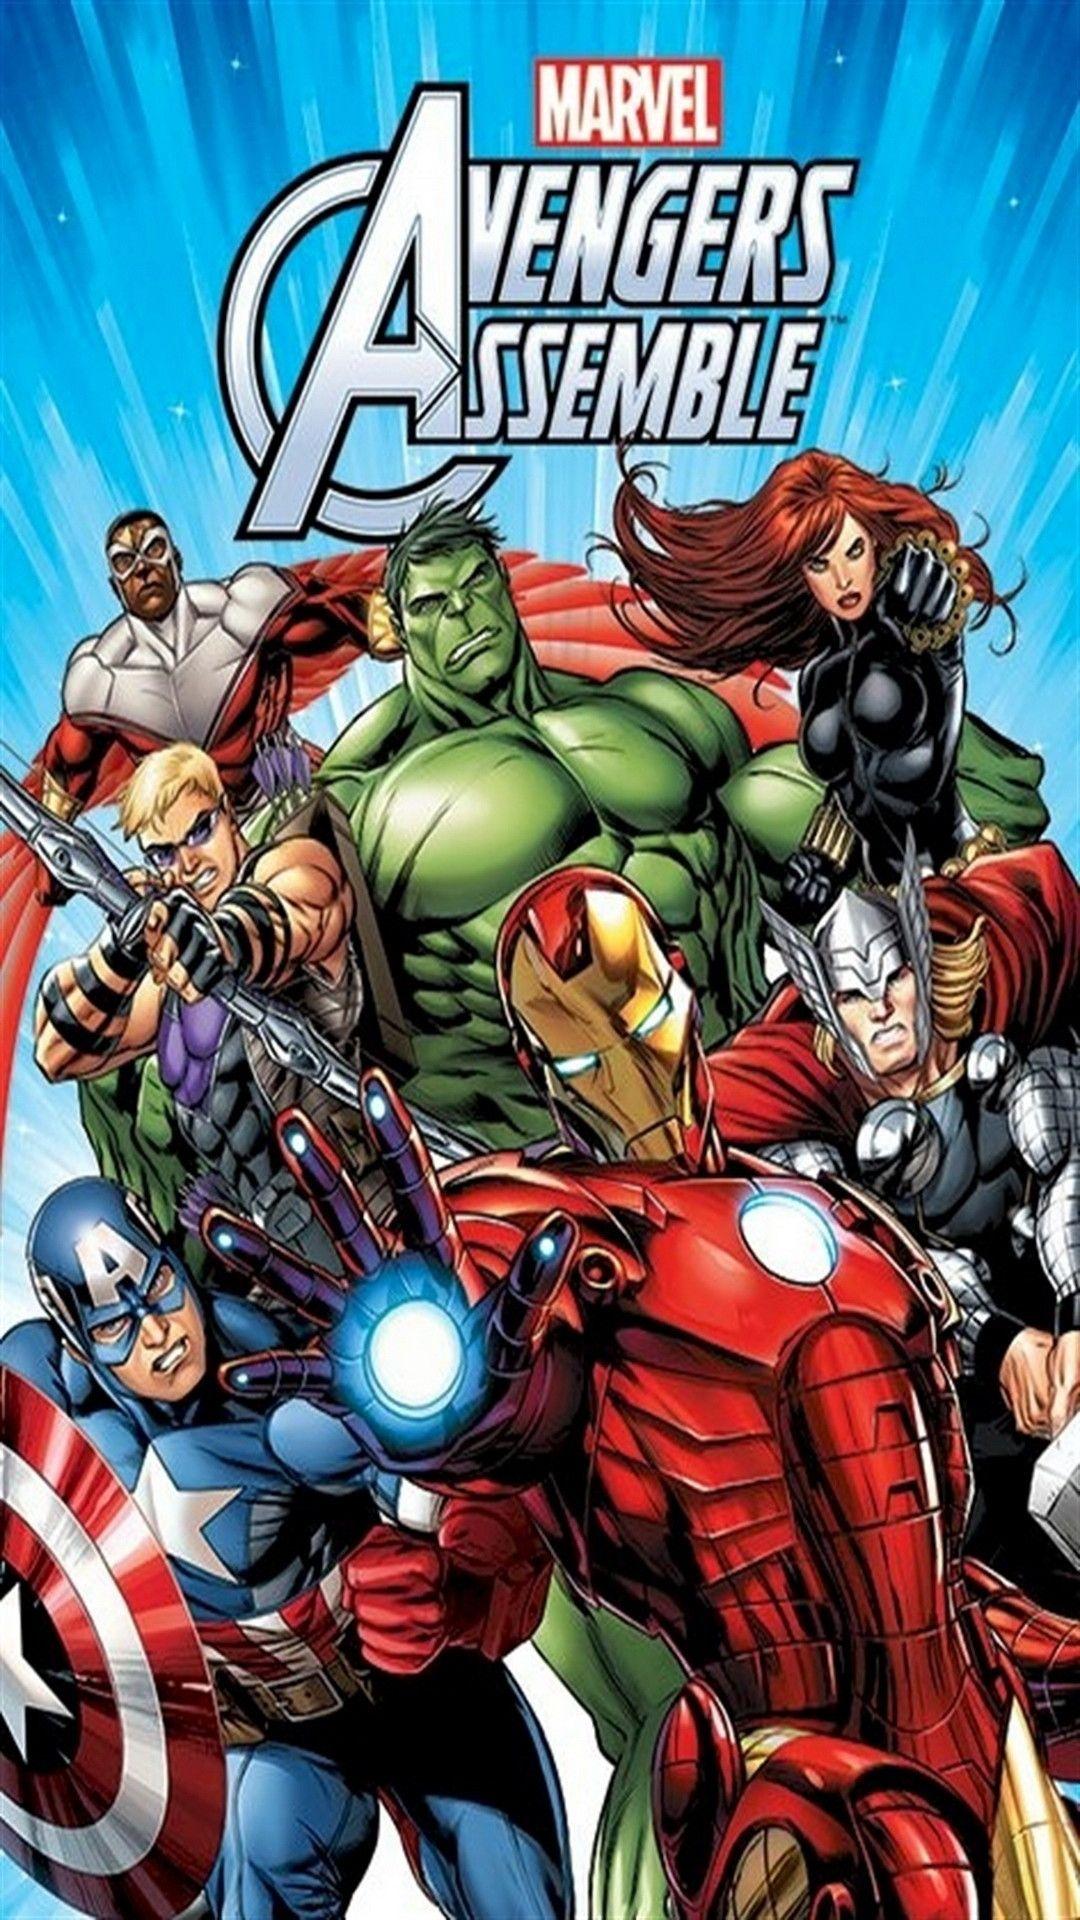 Avengers Cartoon Characters Wallpapers - Top Free Avengers Cartoon ...